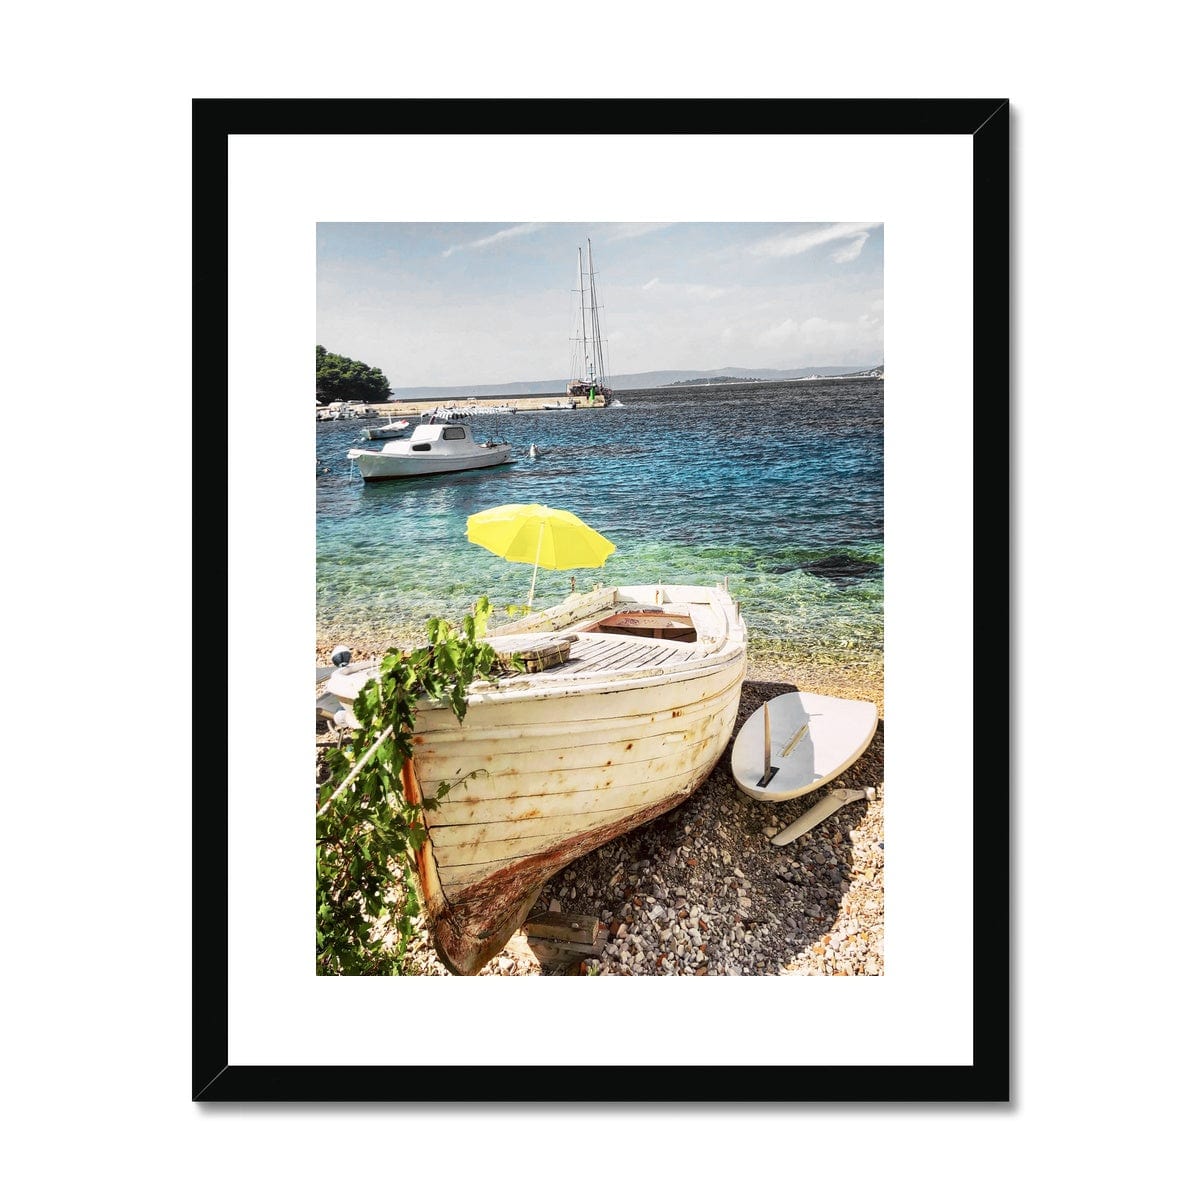 Adam Davies Framed A4 Portrait (21x29.7cm) / Black Frame Korcula Boat Print | Ocean Blue | Nautical | Yellow Umbrella | Summer Skies | Coastal | Framed Print | Wall Art